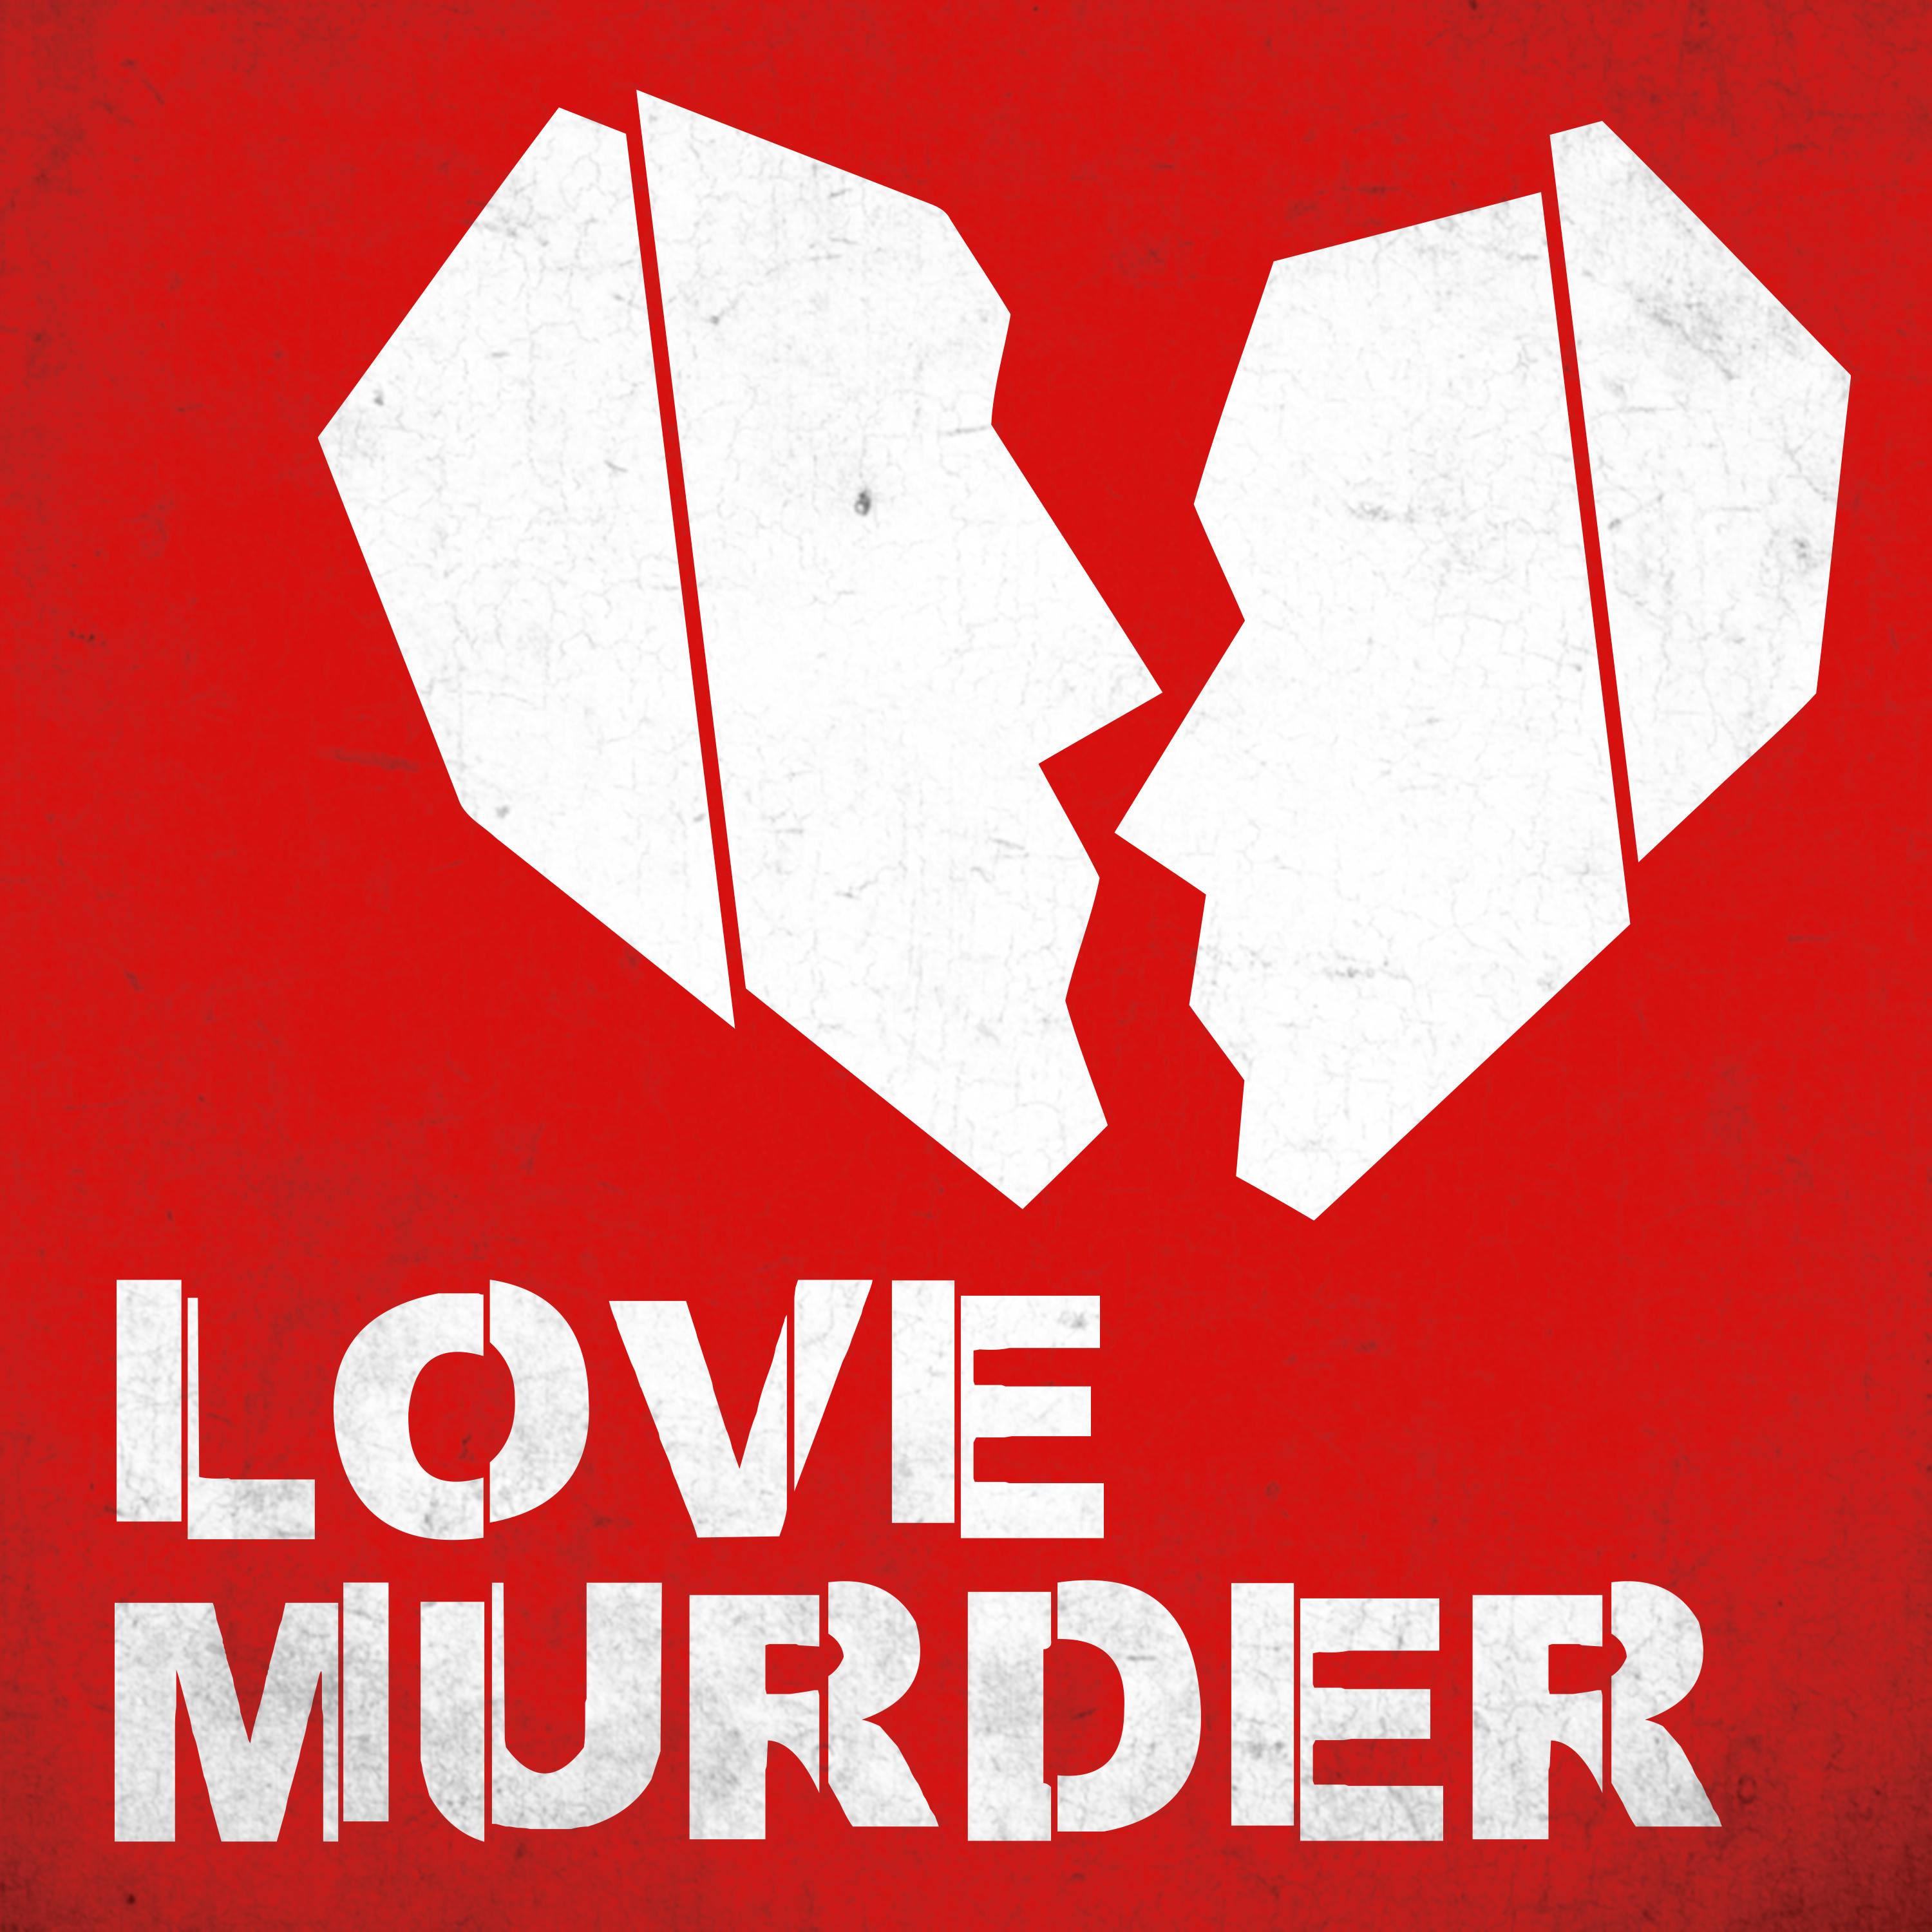 INTRODUCING: Love Murder